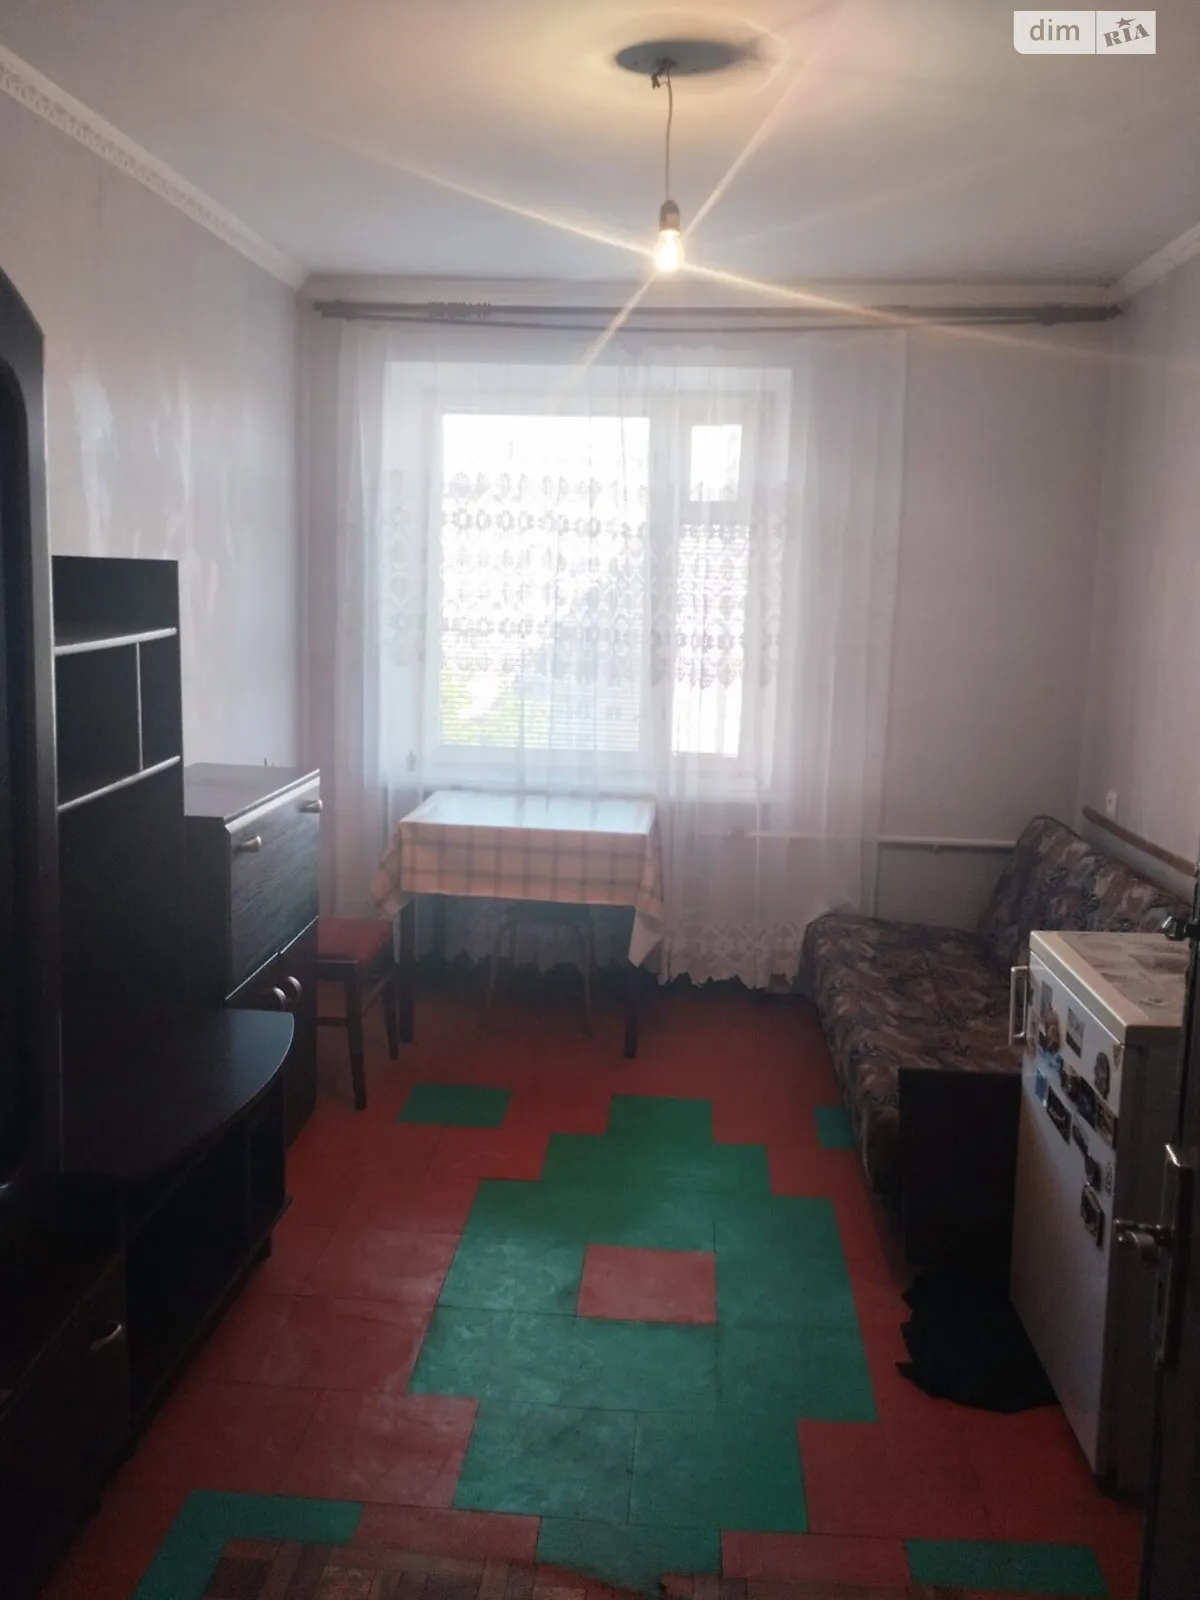 Продается комната 15 кв. м в Тернополе - фото 2